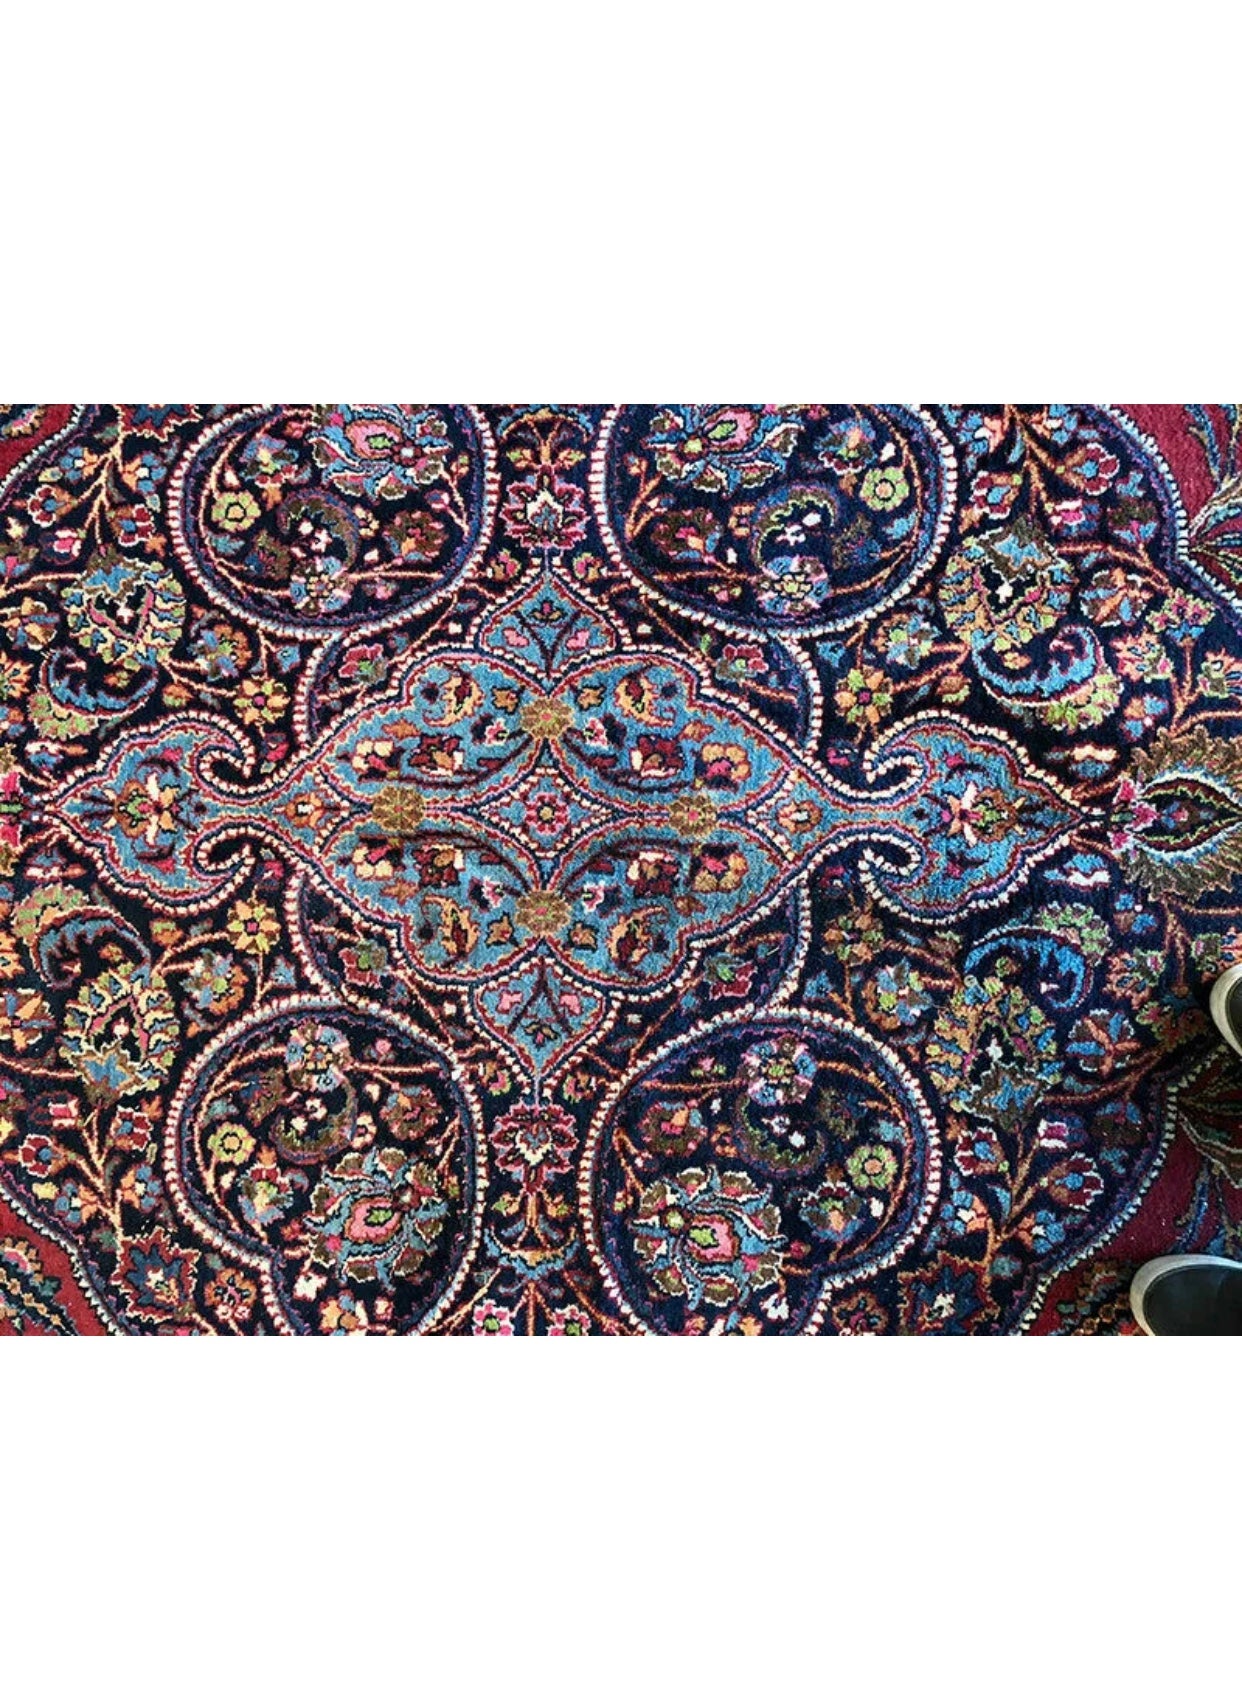 Antique Palace Size Drcorative Persian Khorasan / Mashad Rug